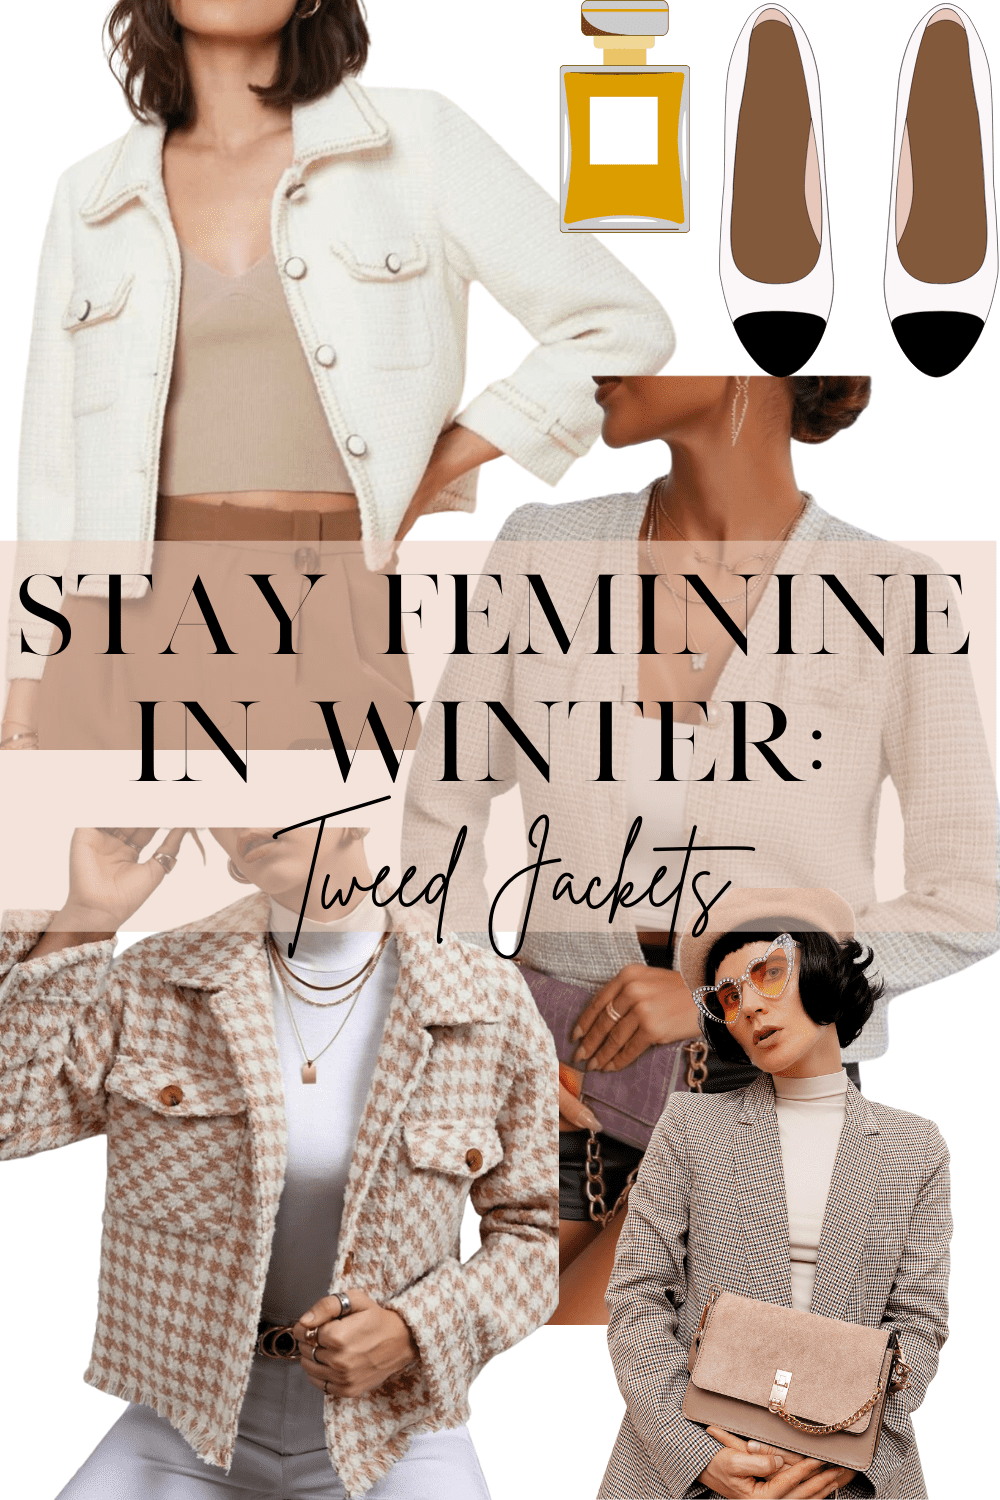 How To Dress Feminine In Winter | 7 Winter Tweed Jackets